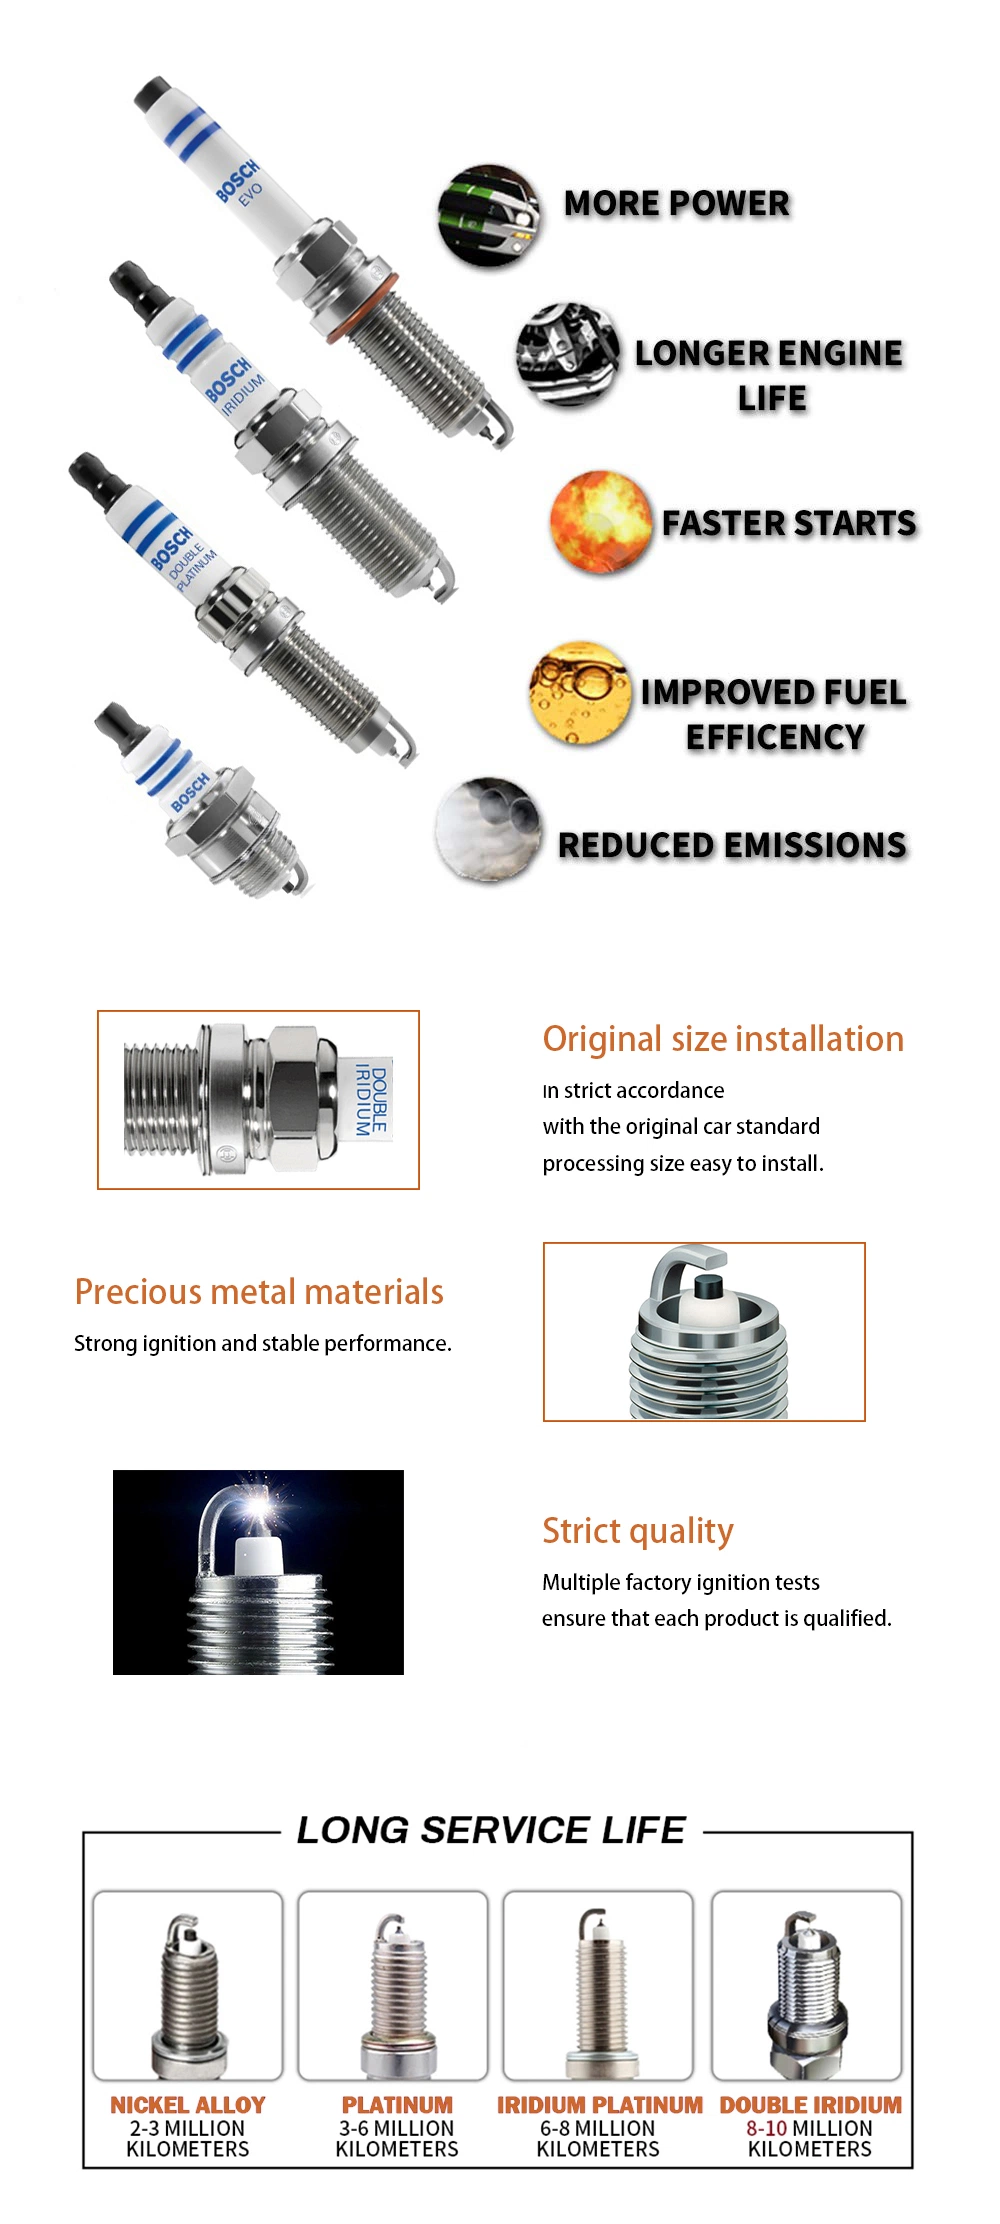 Salable Automotive Electrical System 3179 Nickel Iridium Spark Plug for Denso